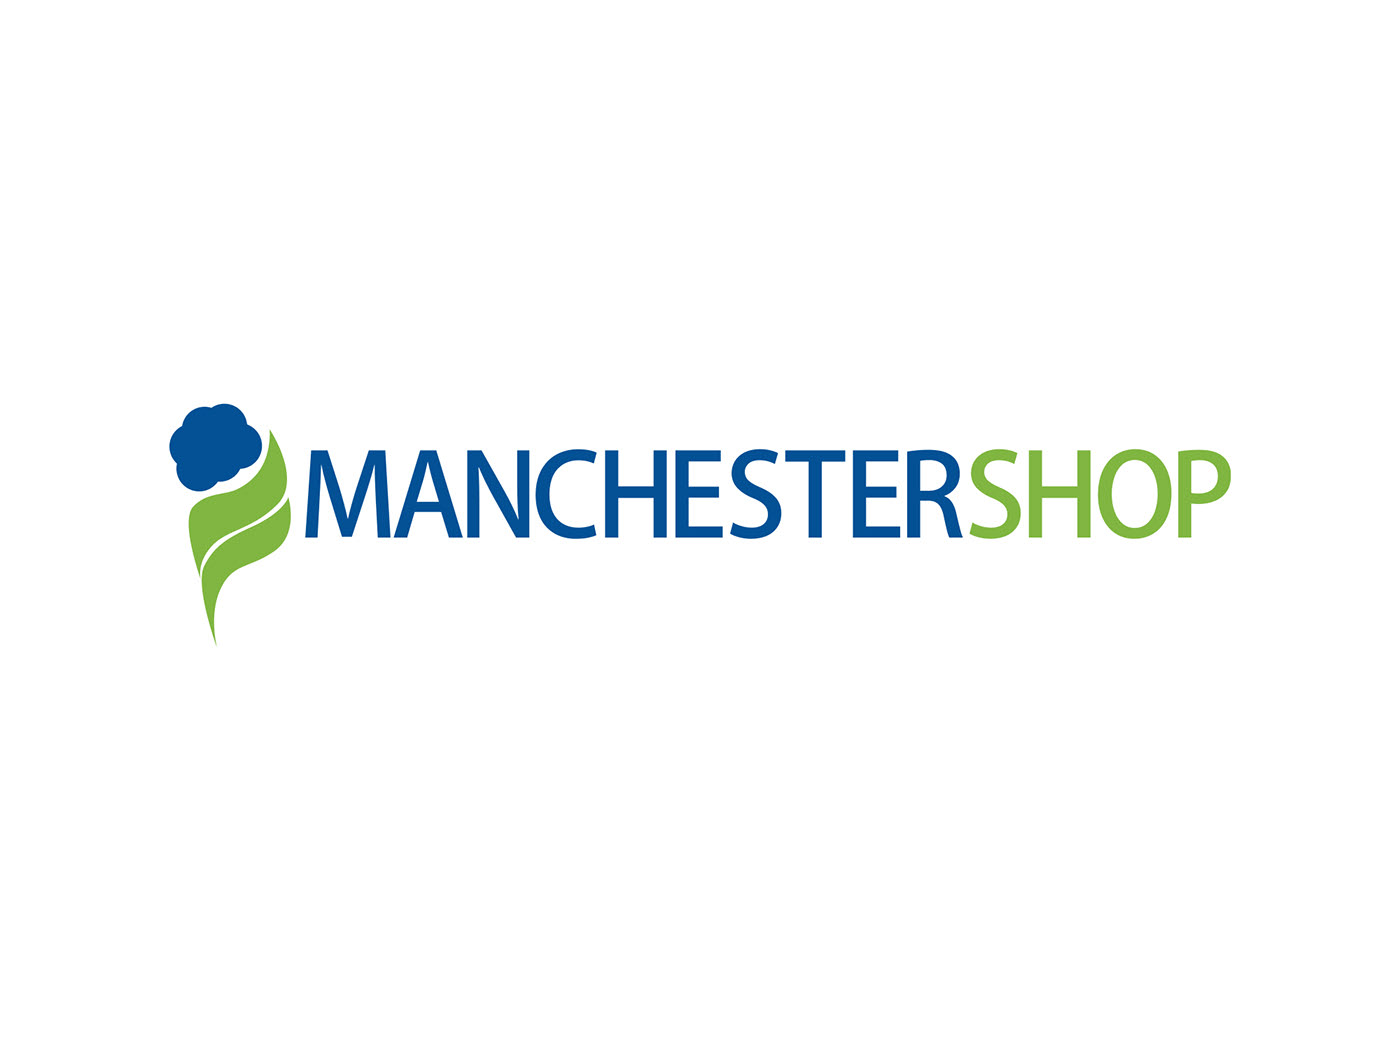 Manchester Shop